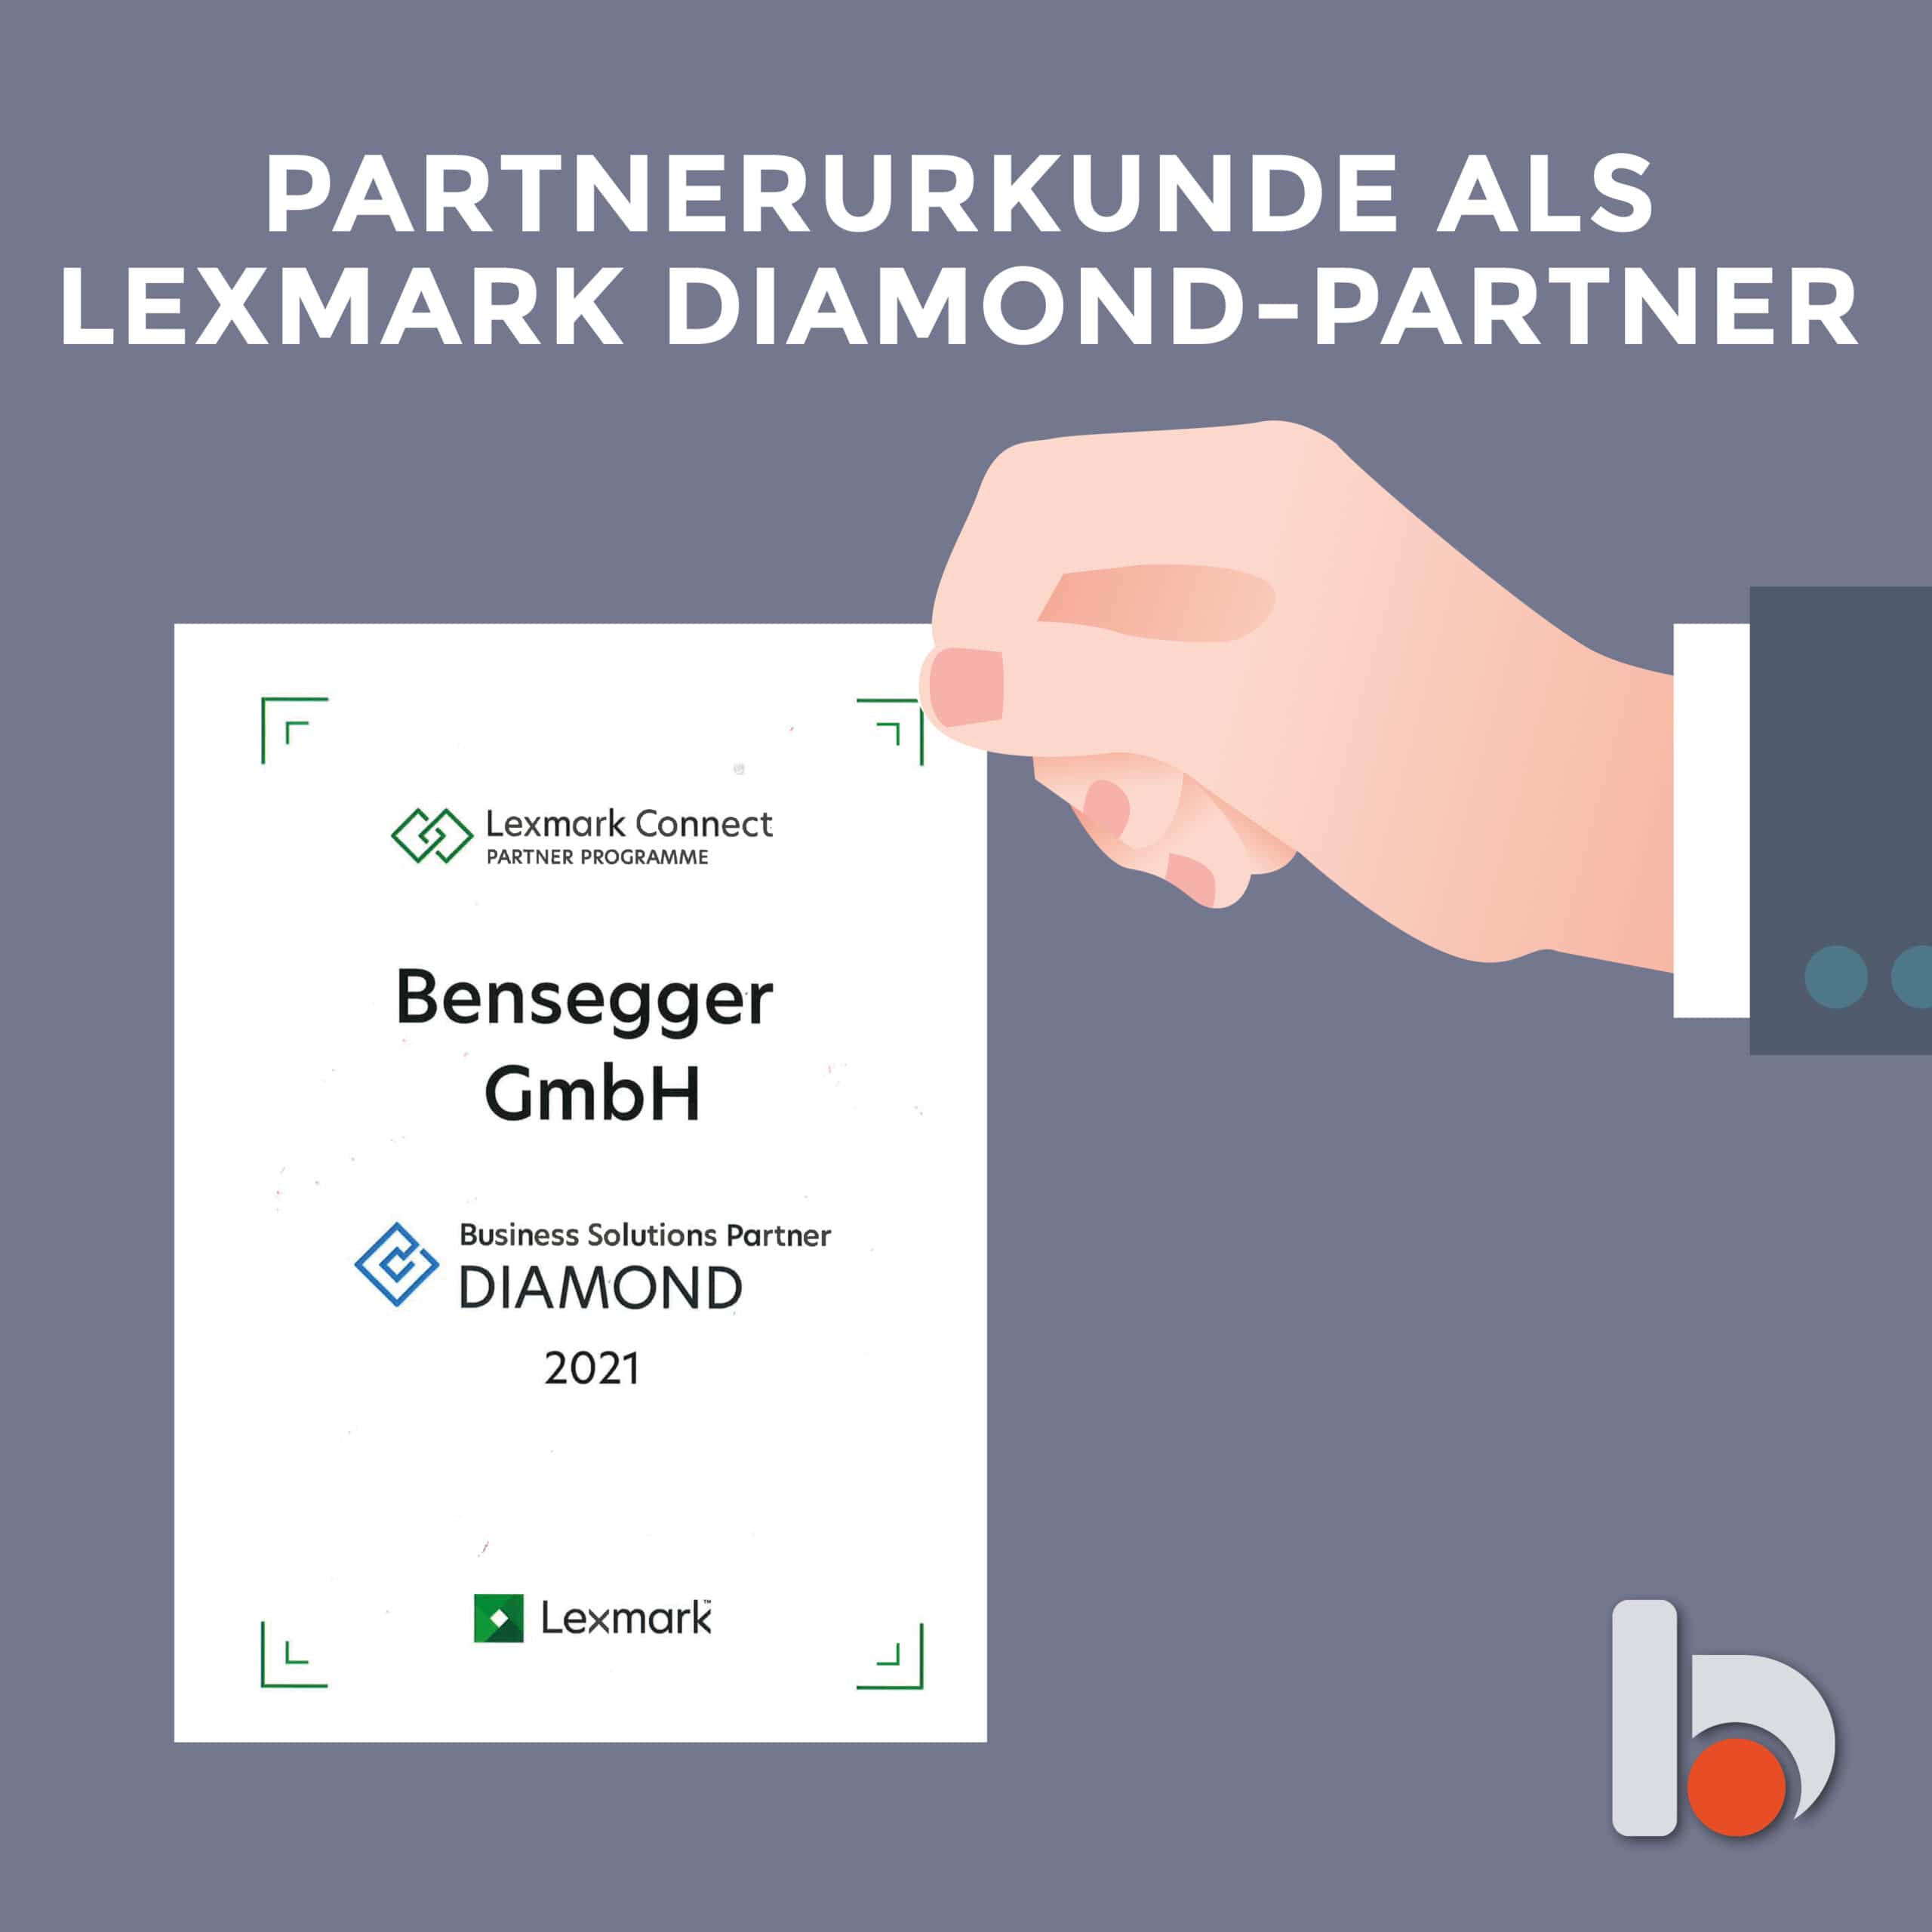 PARTNERURKUNDE ALS LEXMARK DIAMOND-PARTNER